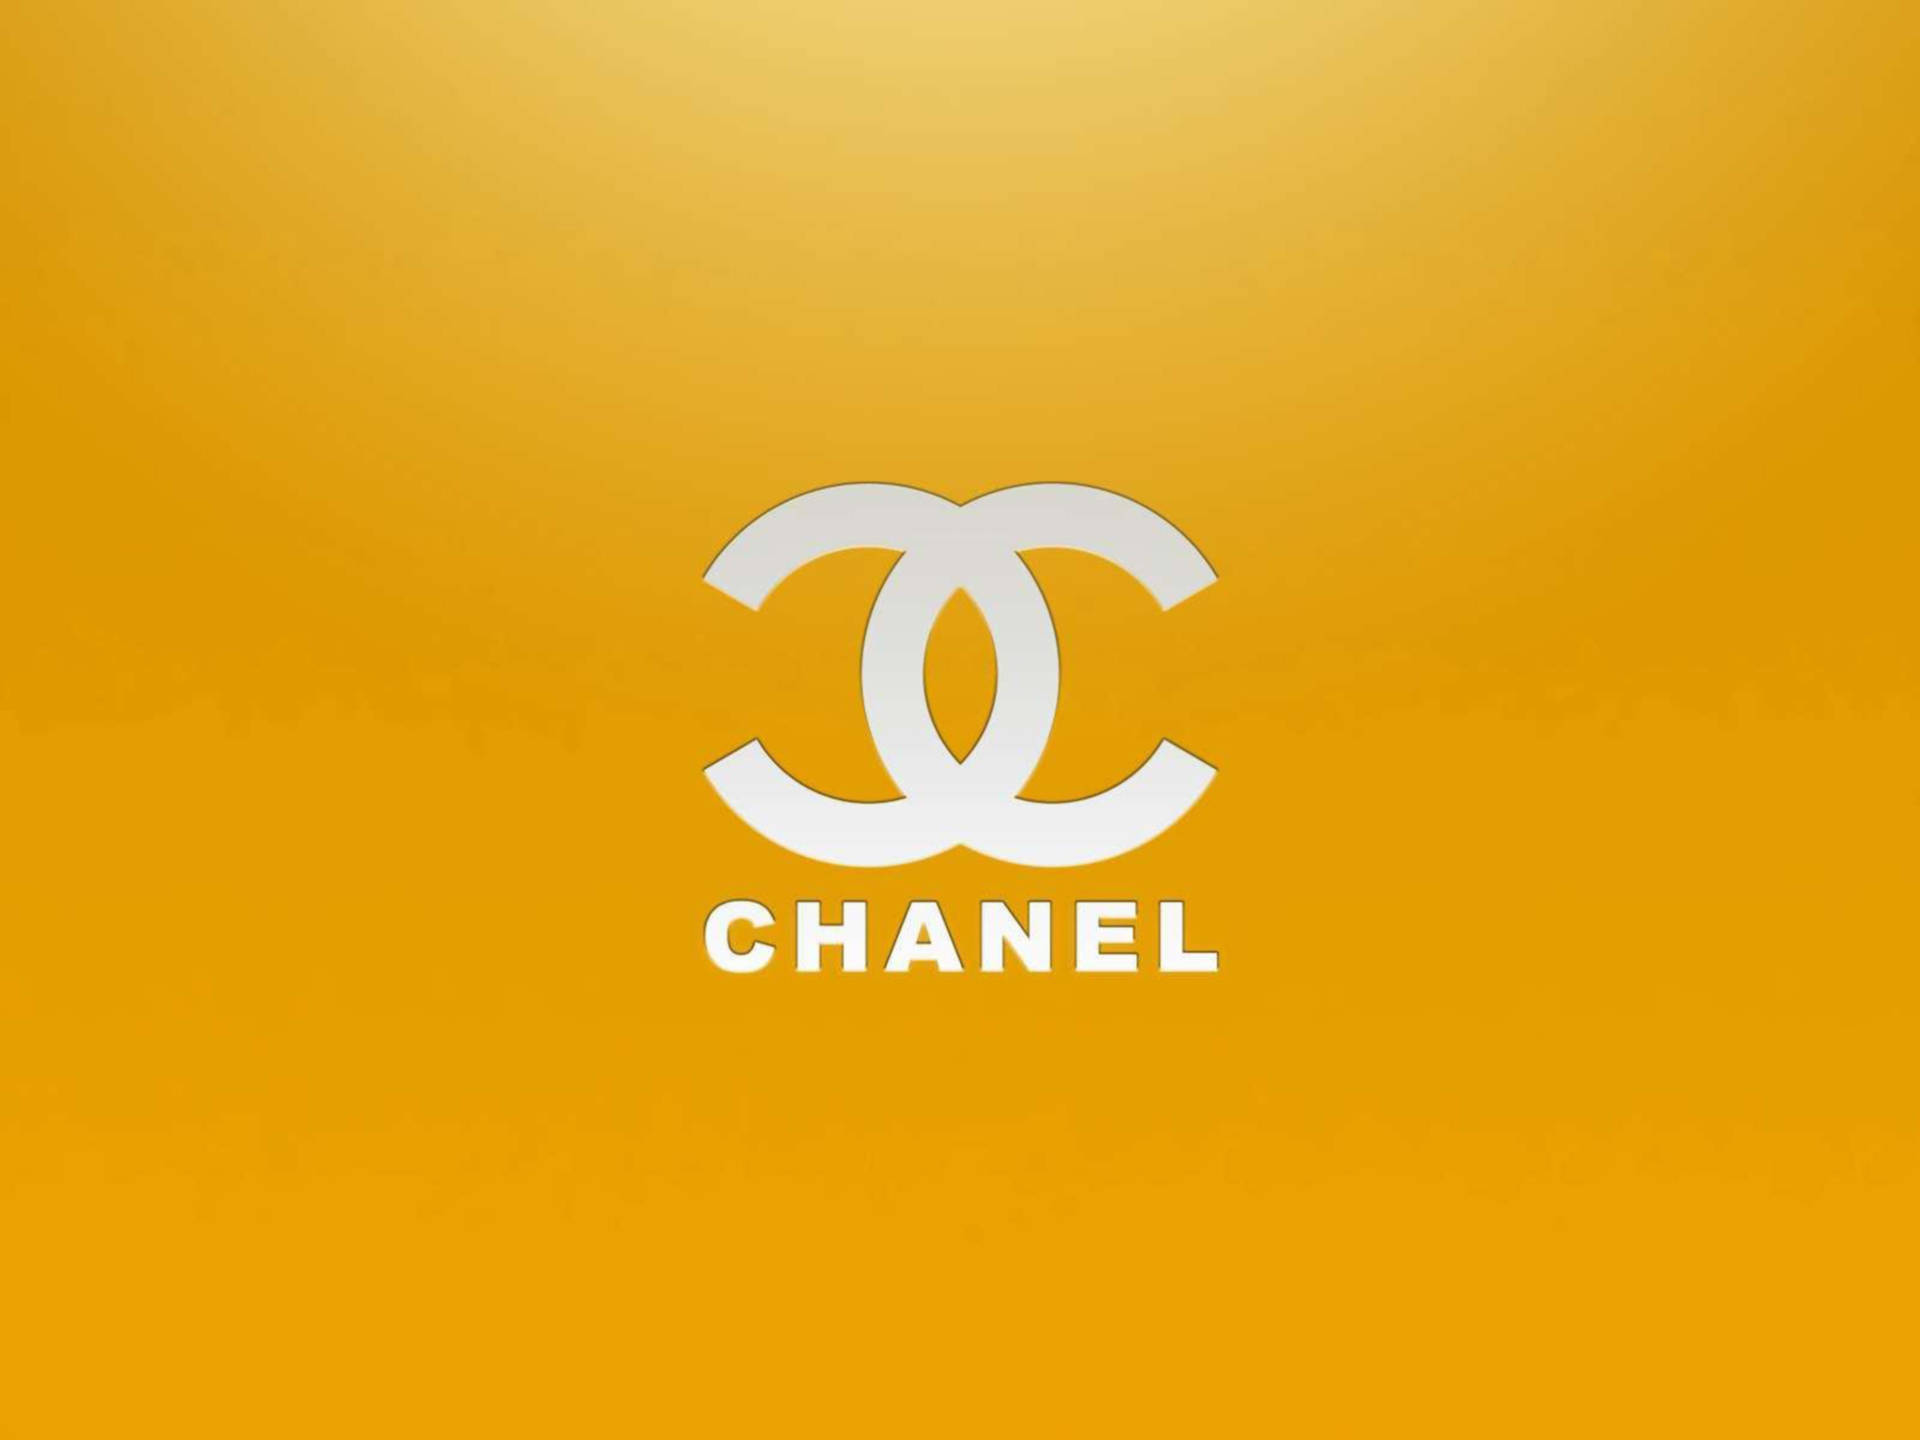 White Chanel Logo On Golden Yellow Wallpaper